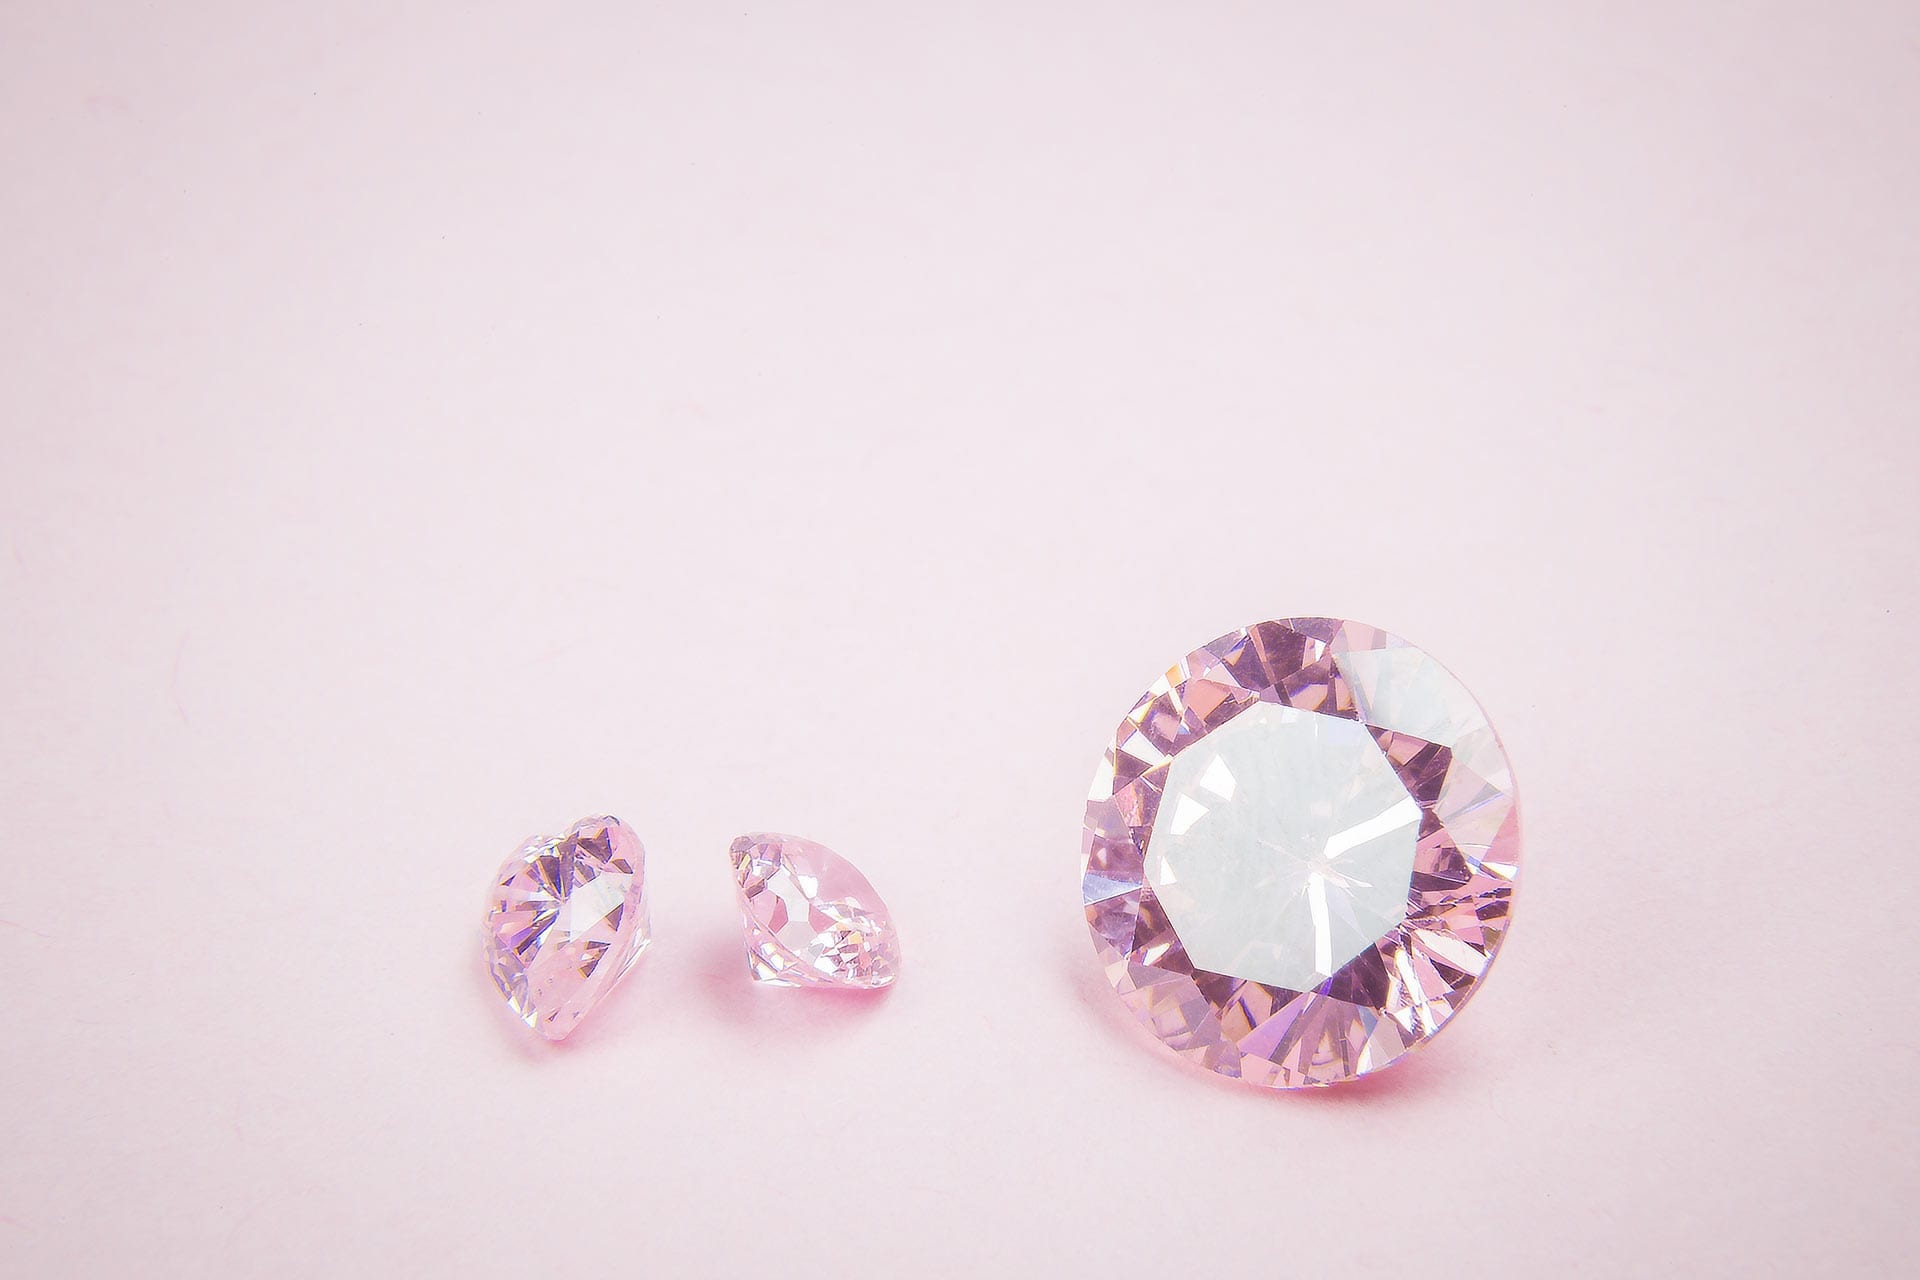 Loose Argyle Diamond Mine Certified Three Pink Oval Cut Diamonds Large Size